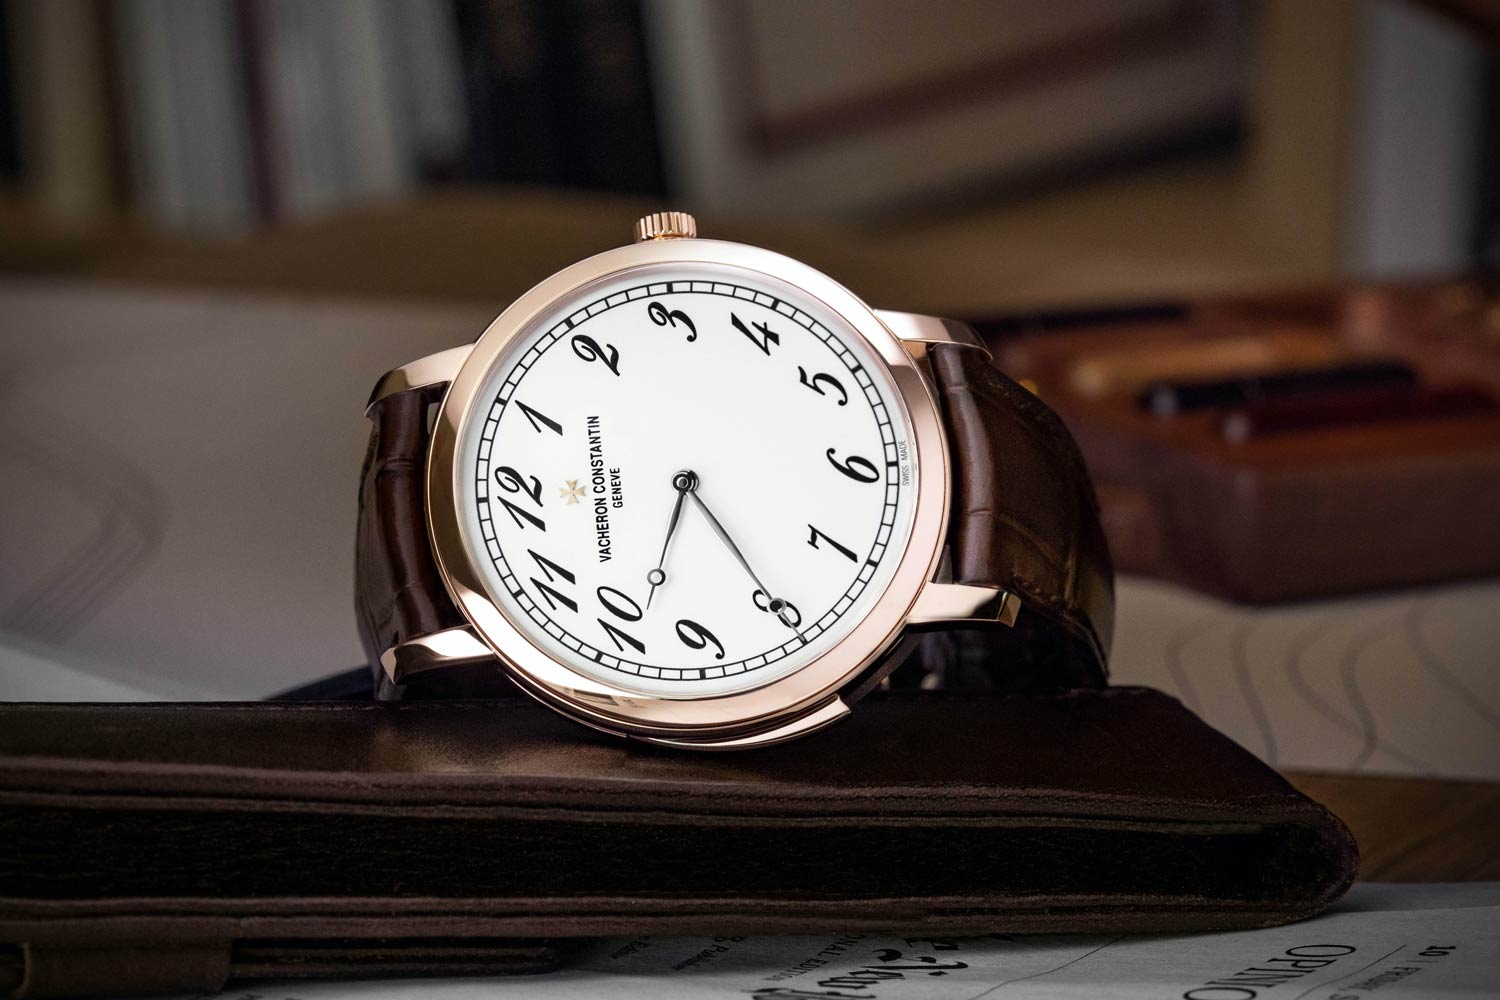 In 2019, Vacheron Constantin announced 11 unique chiming watches as part of the Les Cabinotiers 'La Musique Du Temps' Collection. Seen here is the 'La Musique du Temps' Les Cabinotiers Minute Repeater Ultra-Thin